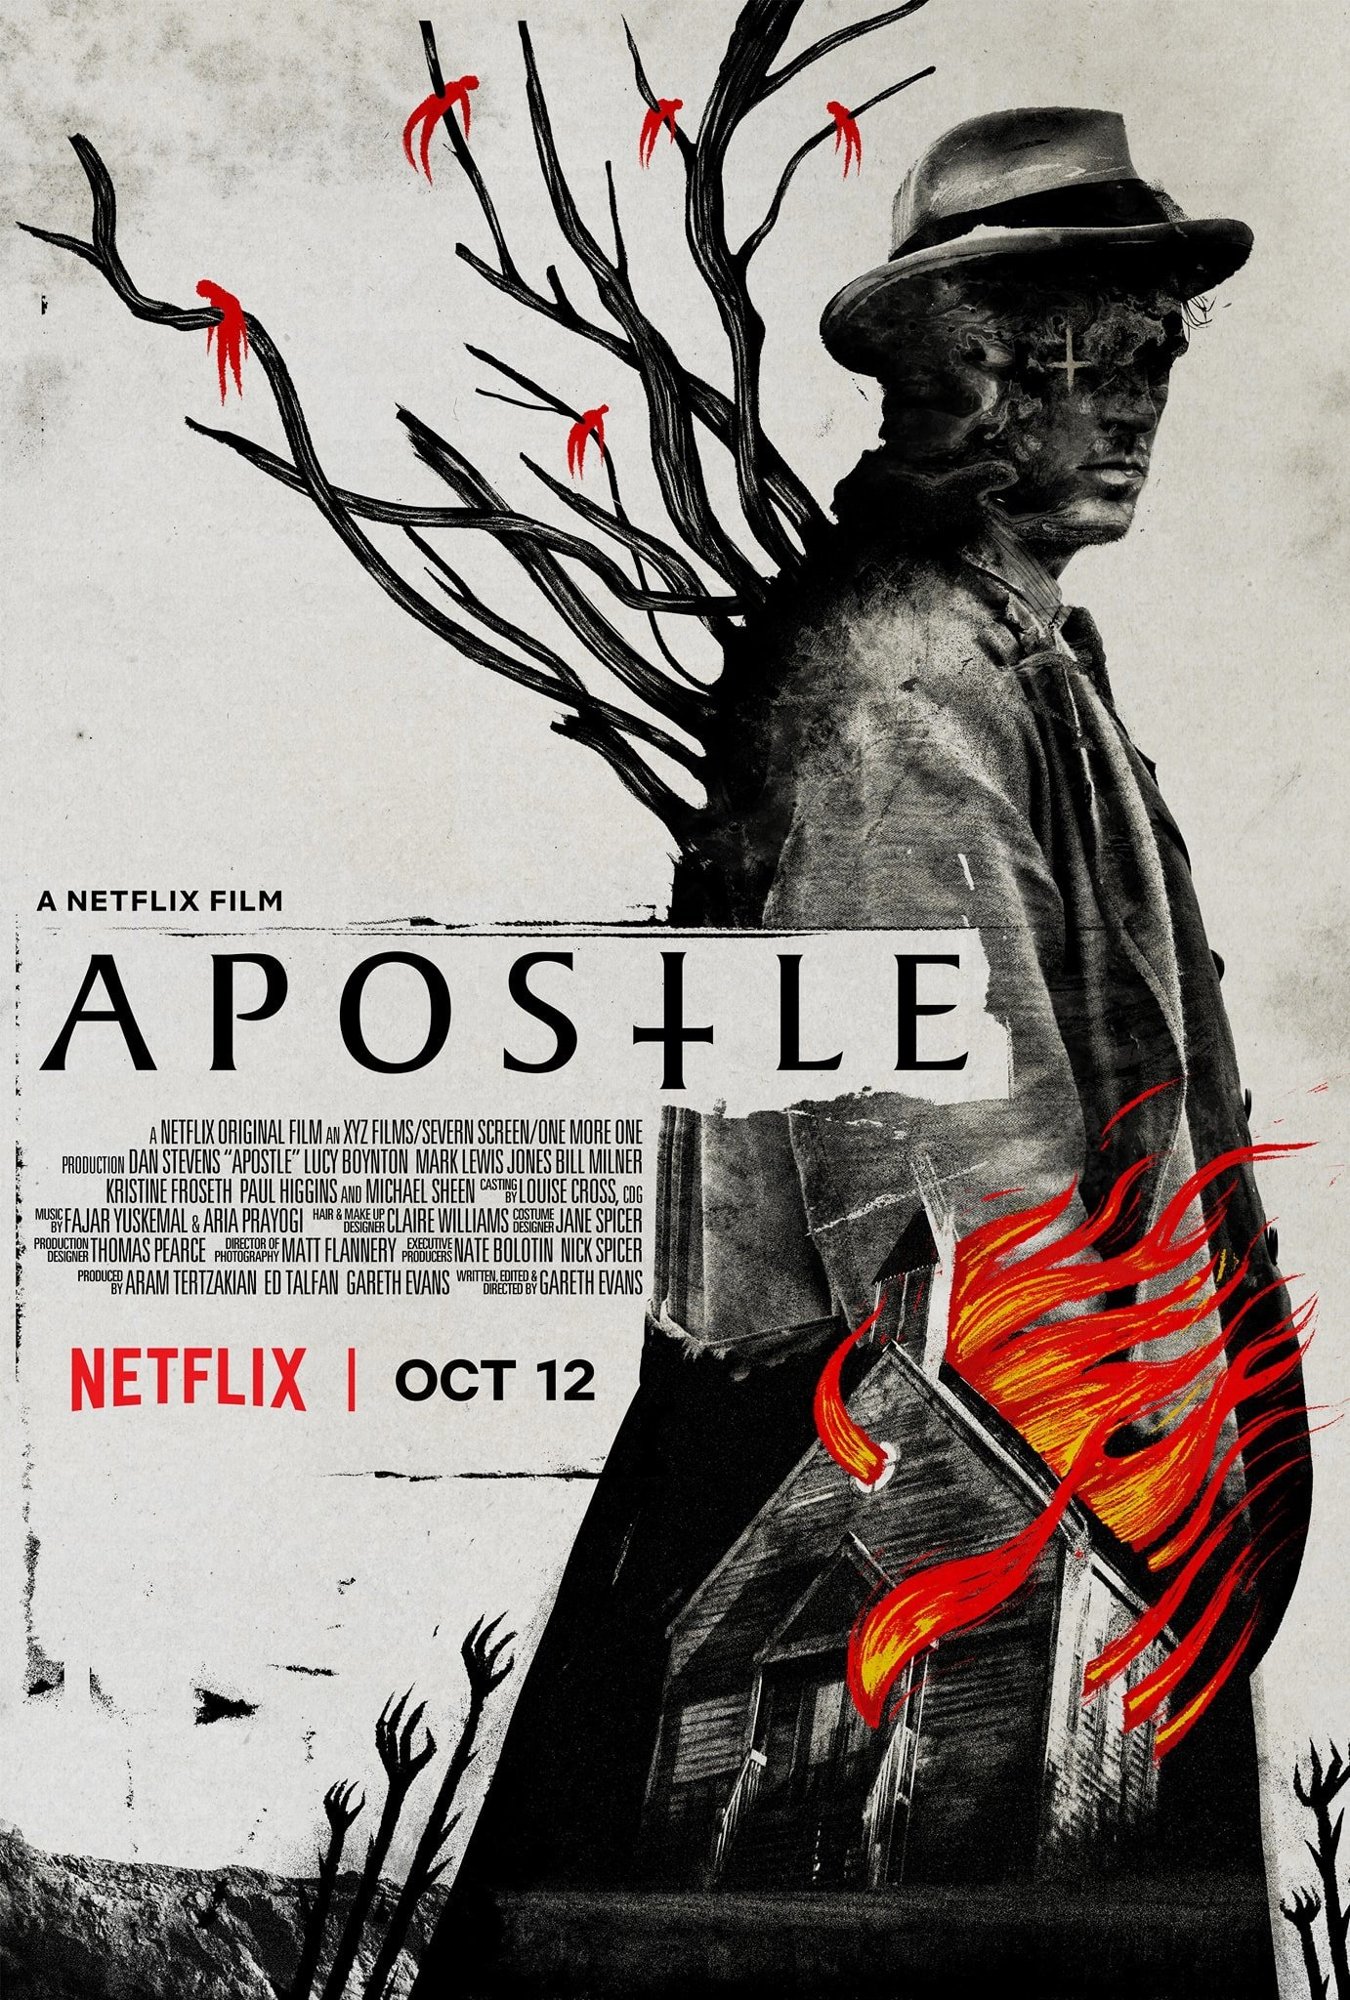 Poster of Netflix's Apostle (2018)